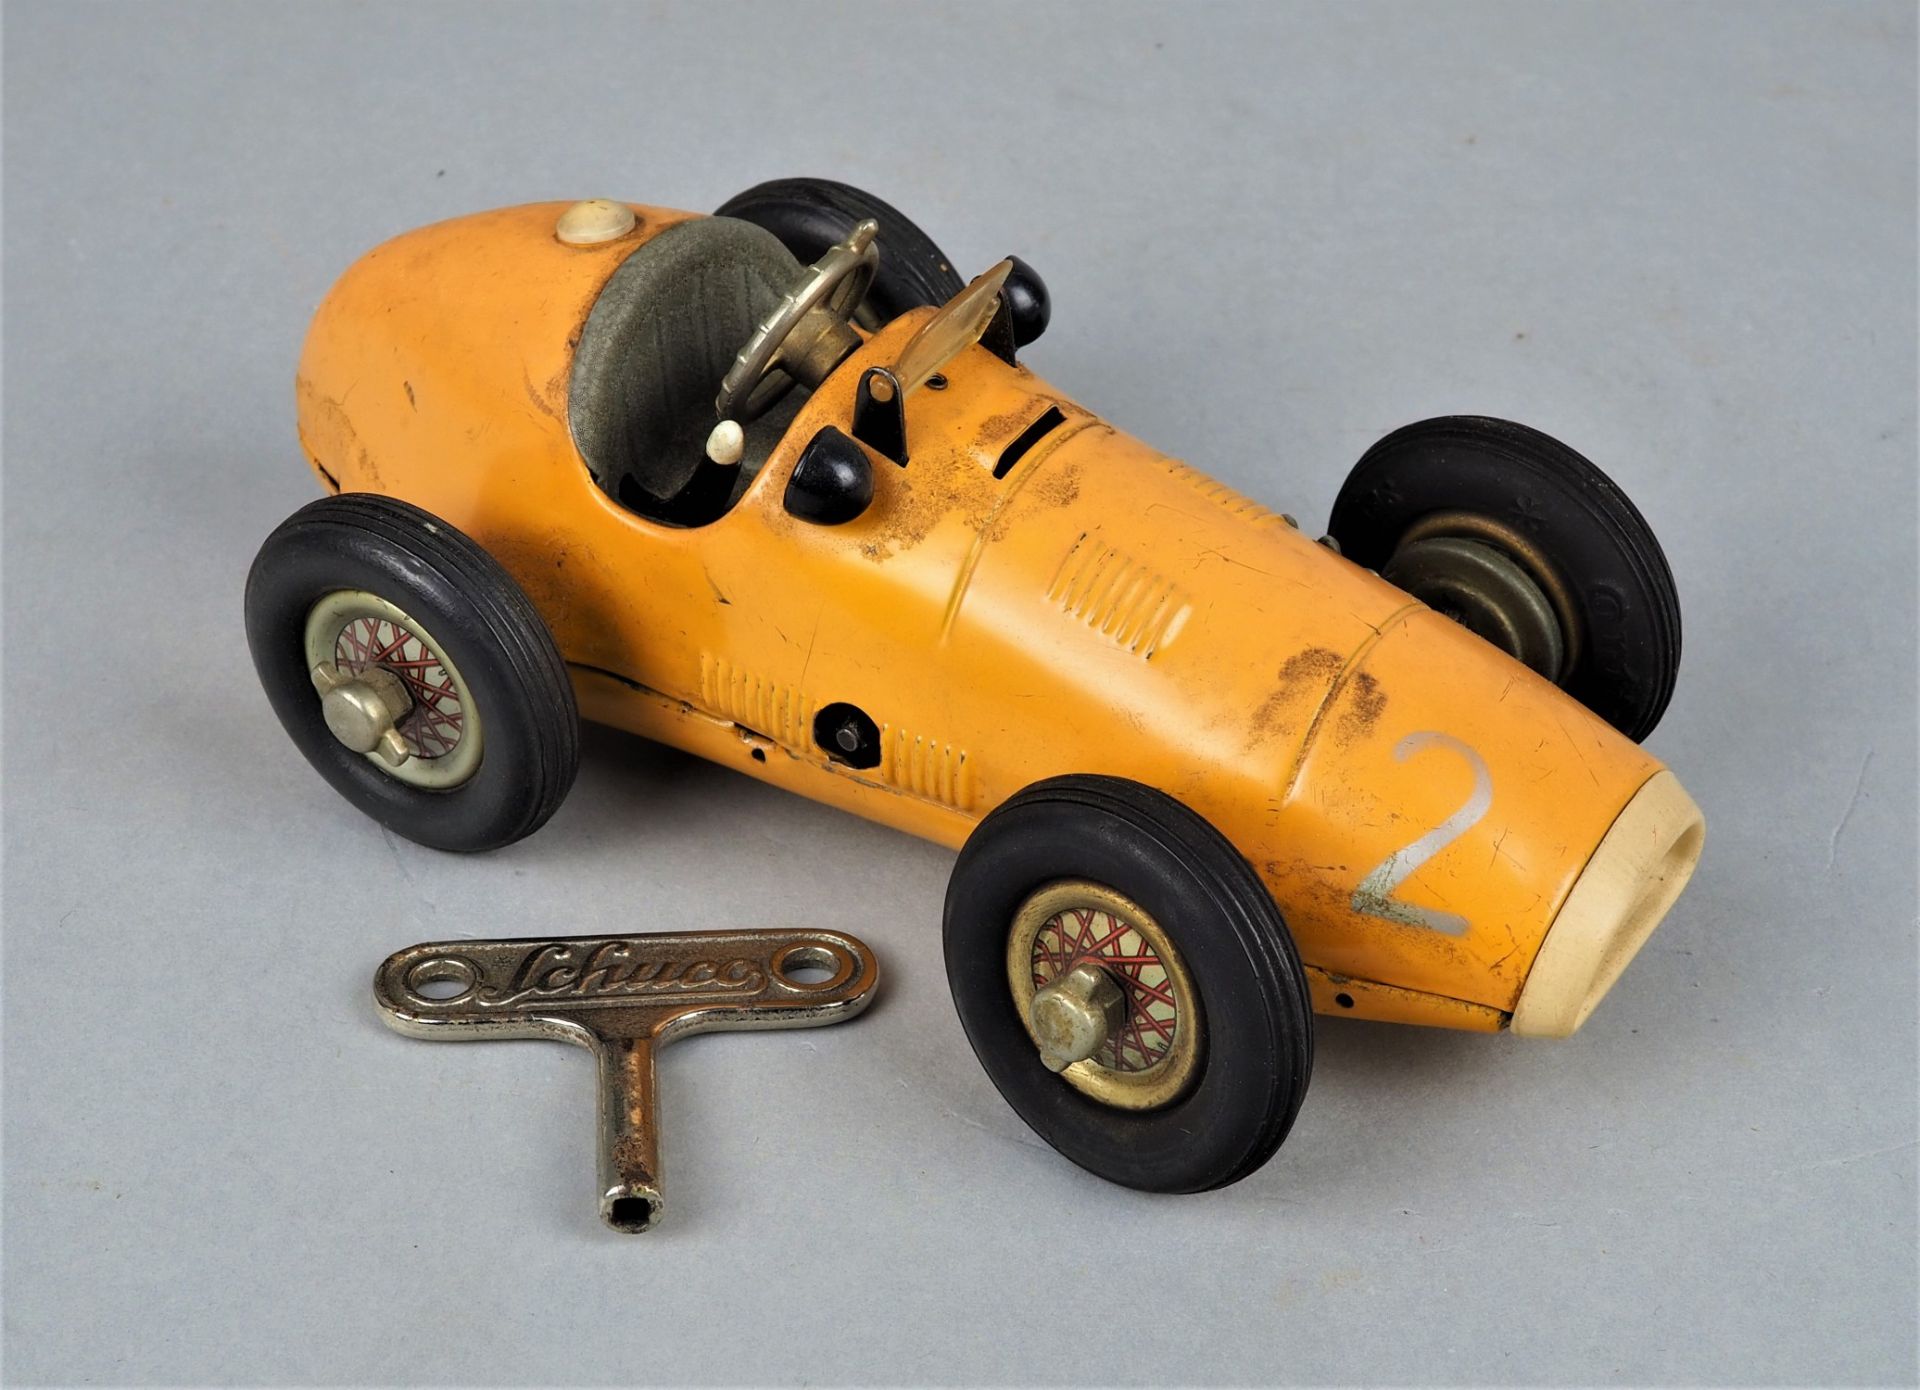 Schuco "Grand Prix Racer", 1949